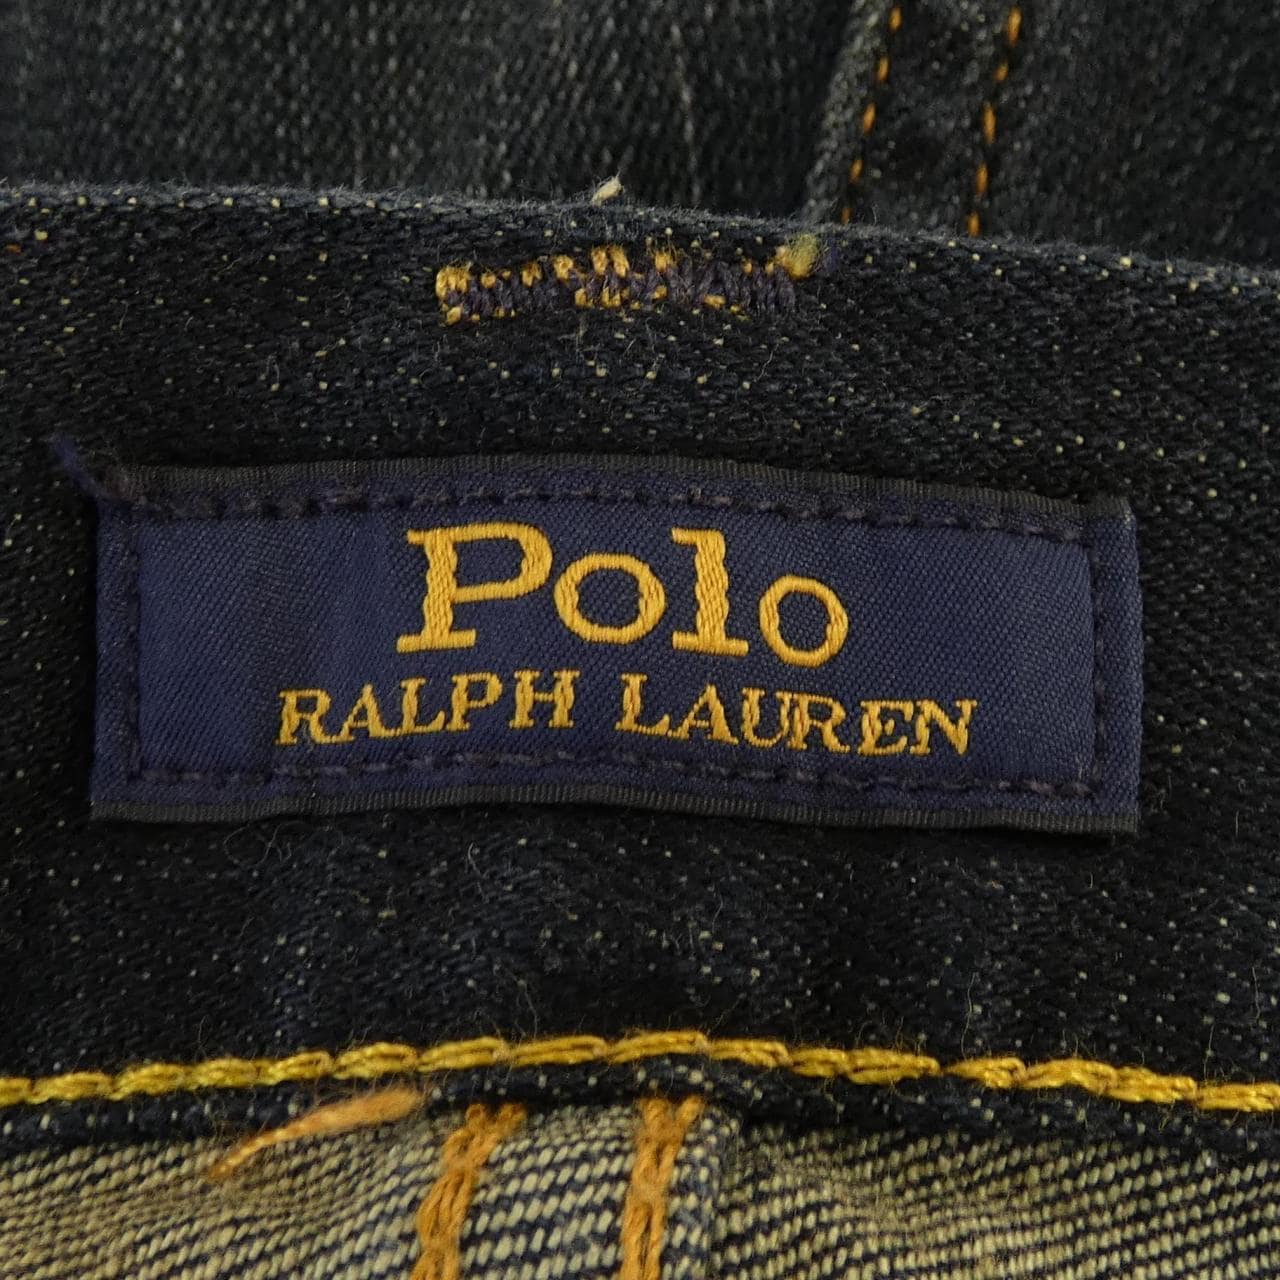 Polo Ralph Lauren POLO RALPH LAUREN jeans